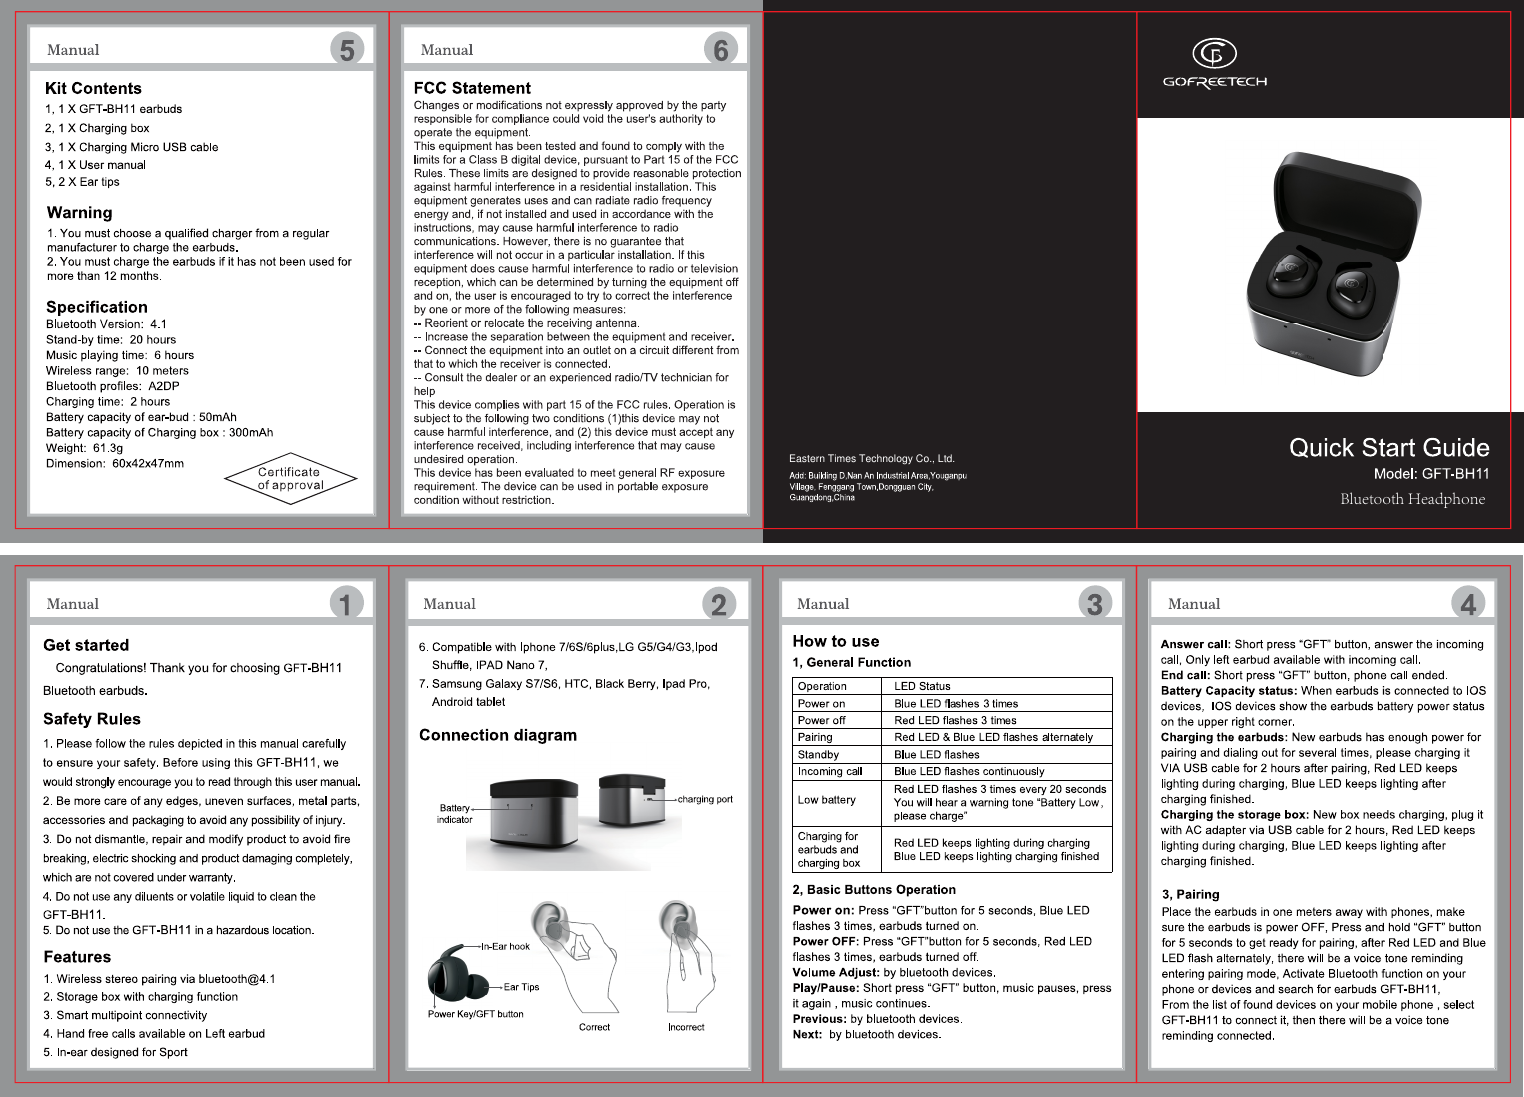 Bluetooth HeadphoneEastern Times Technology Co., Ltd.